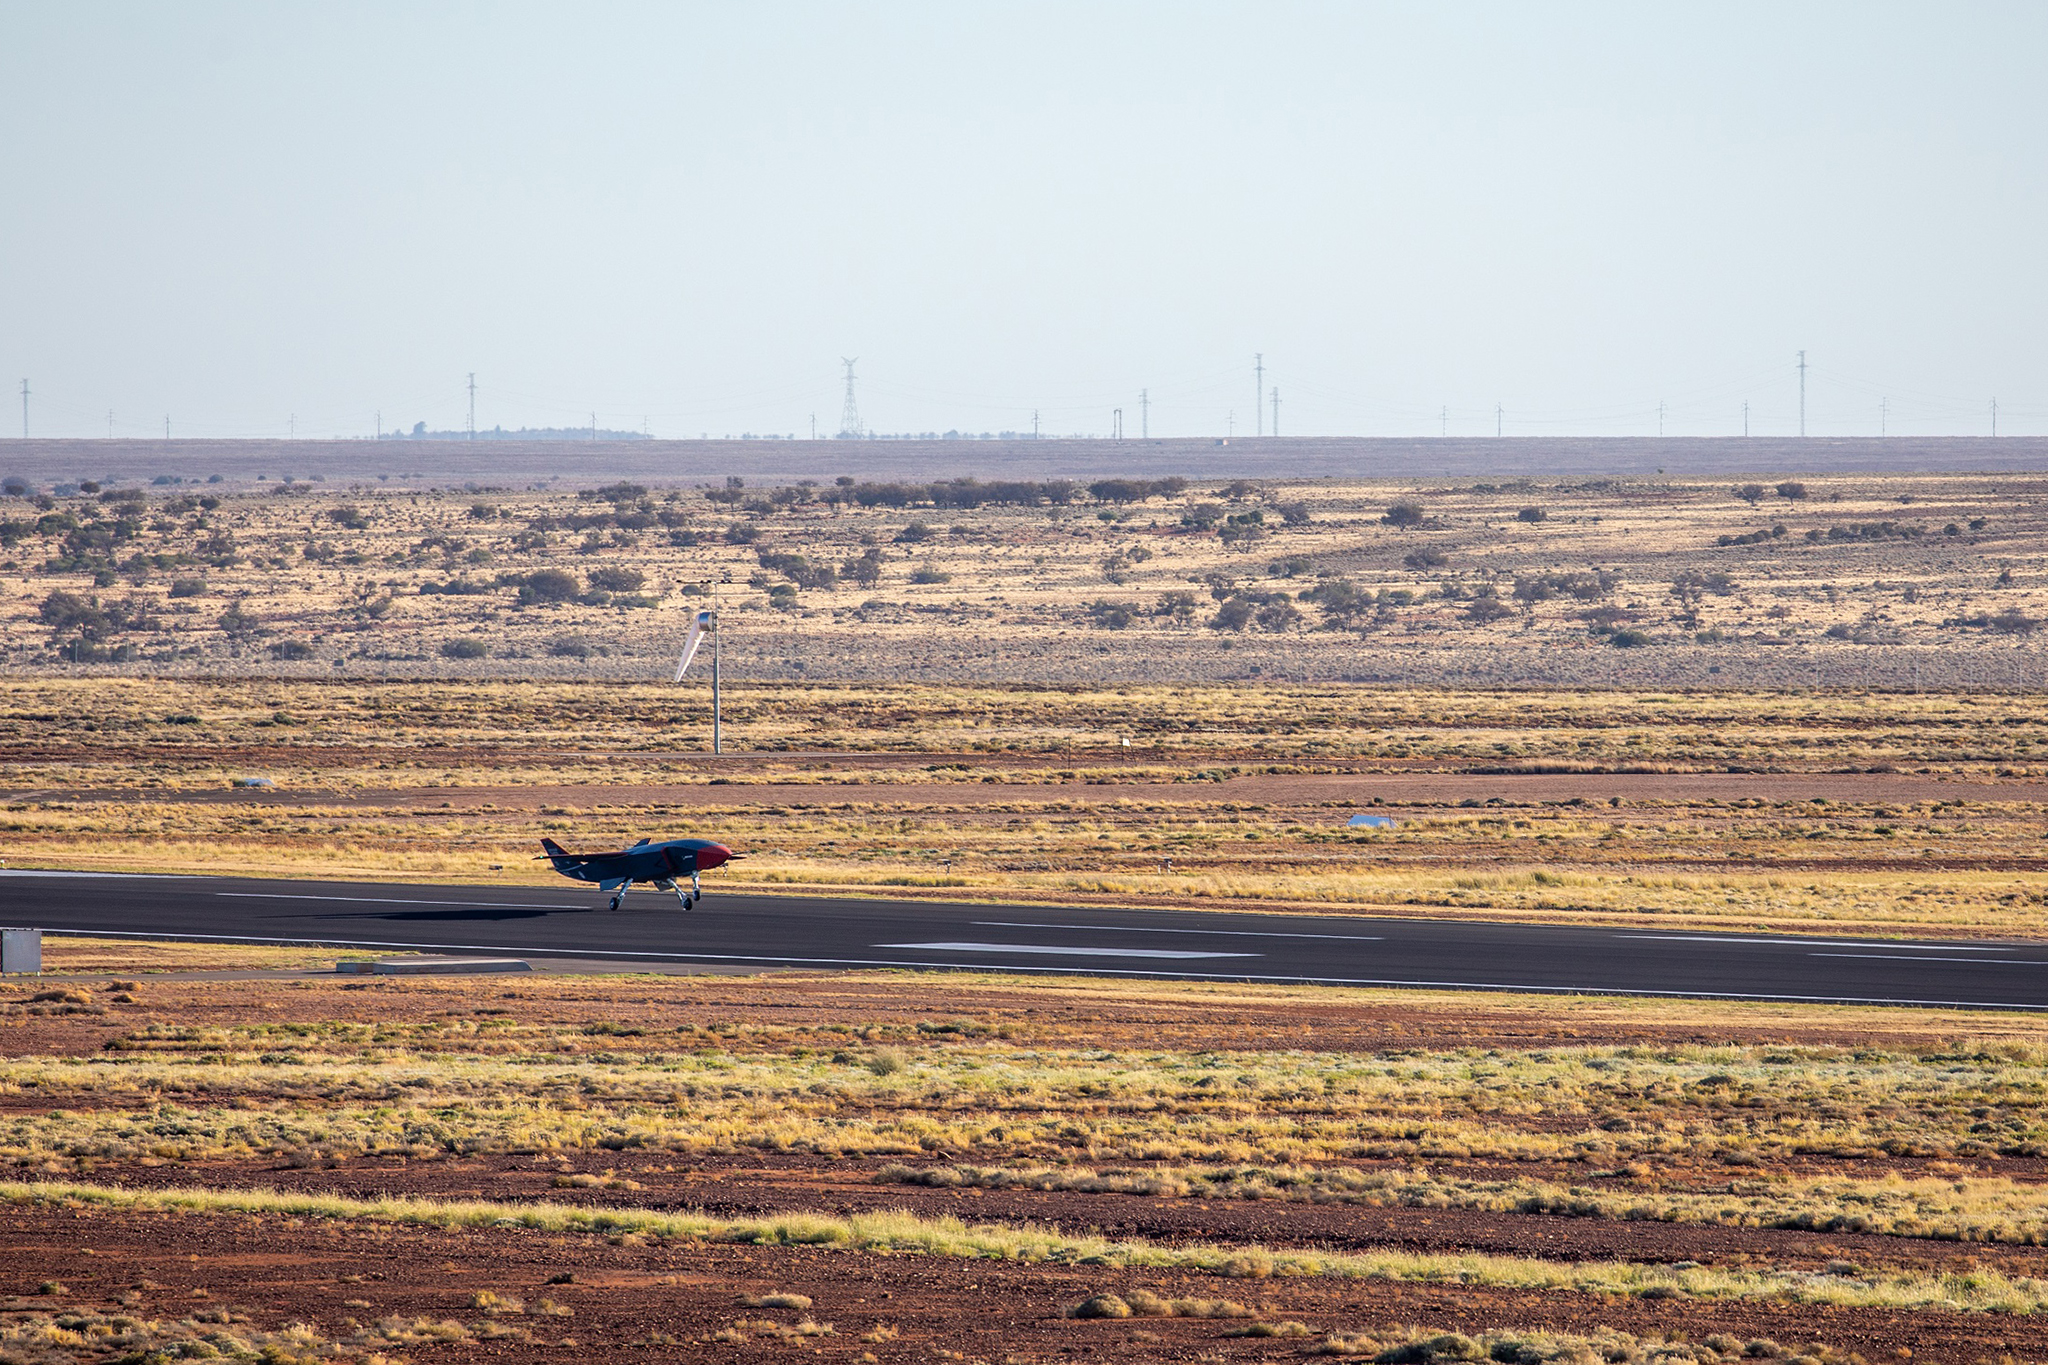 Boeing's Loyal Wingman getting airborne at RAAF Base Woomera